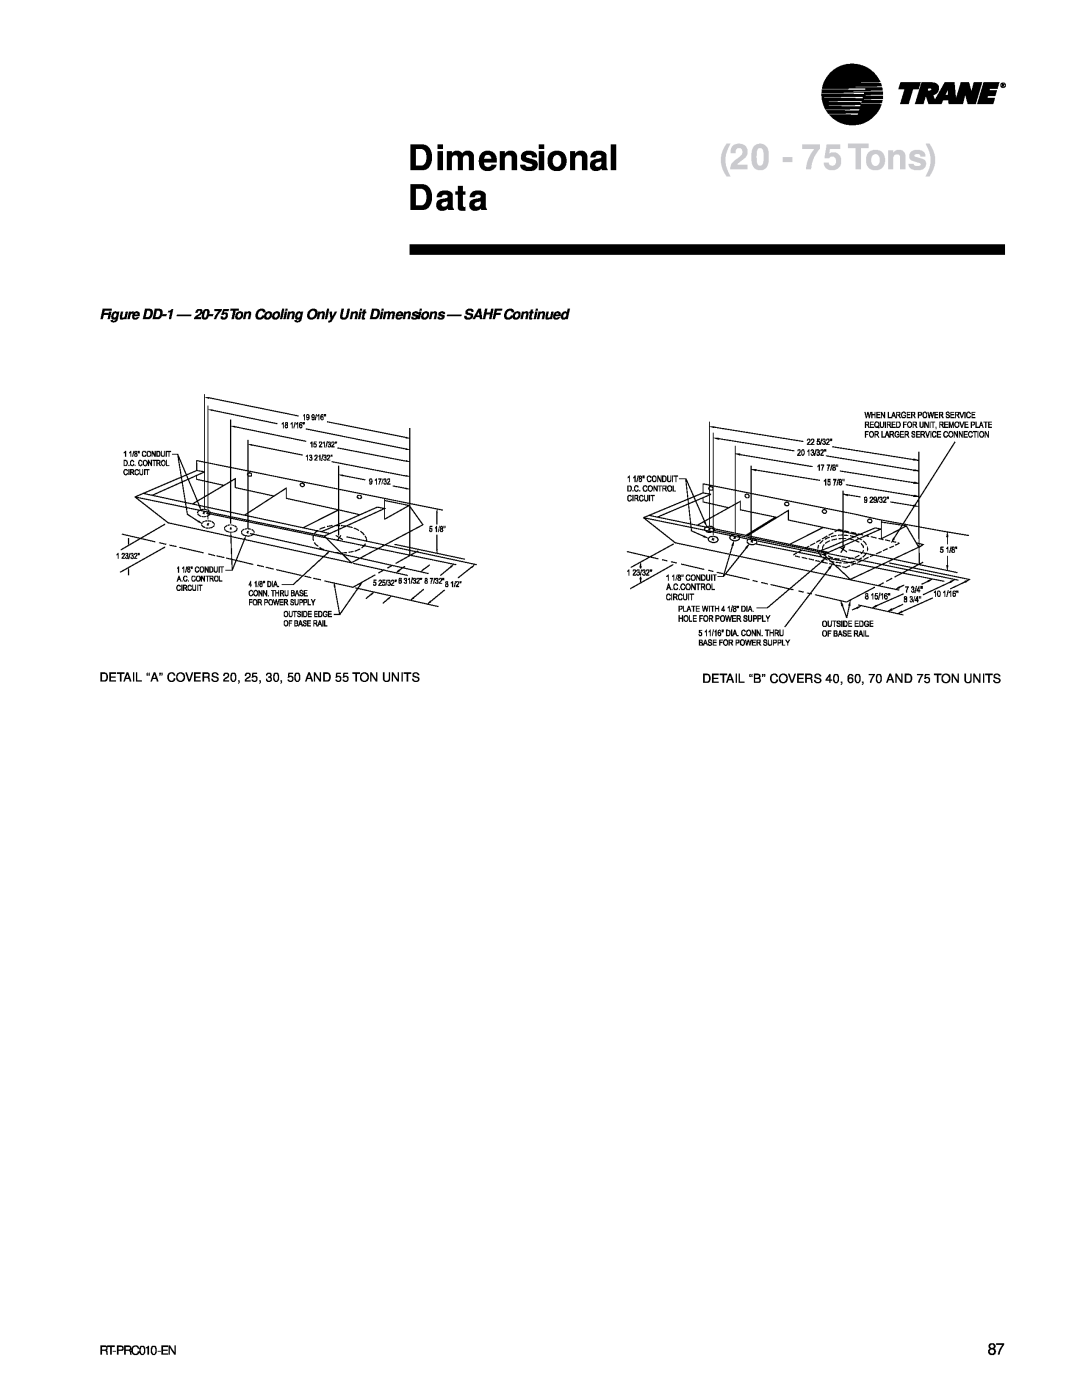 Trane RT-PRC010-EN manual Dimensional 20 - 75Tons, Data, DETAIL “A” COVERS 20, 25, 30, 50 AND 55 TON UNITS 